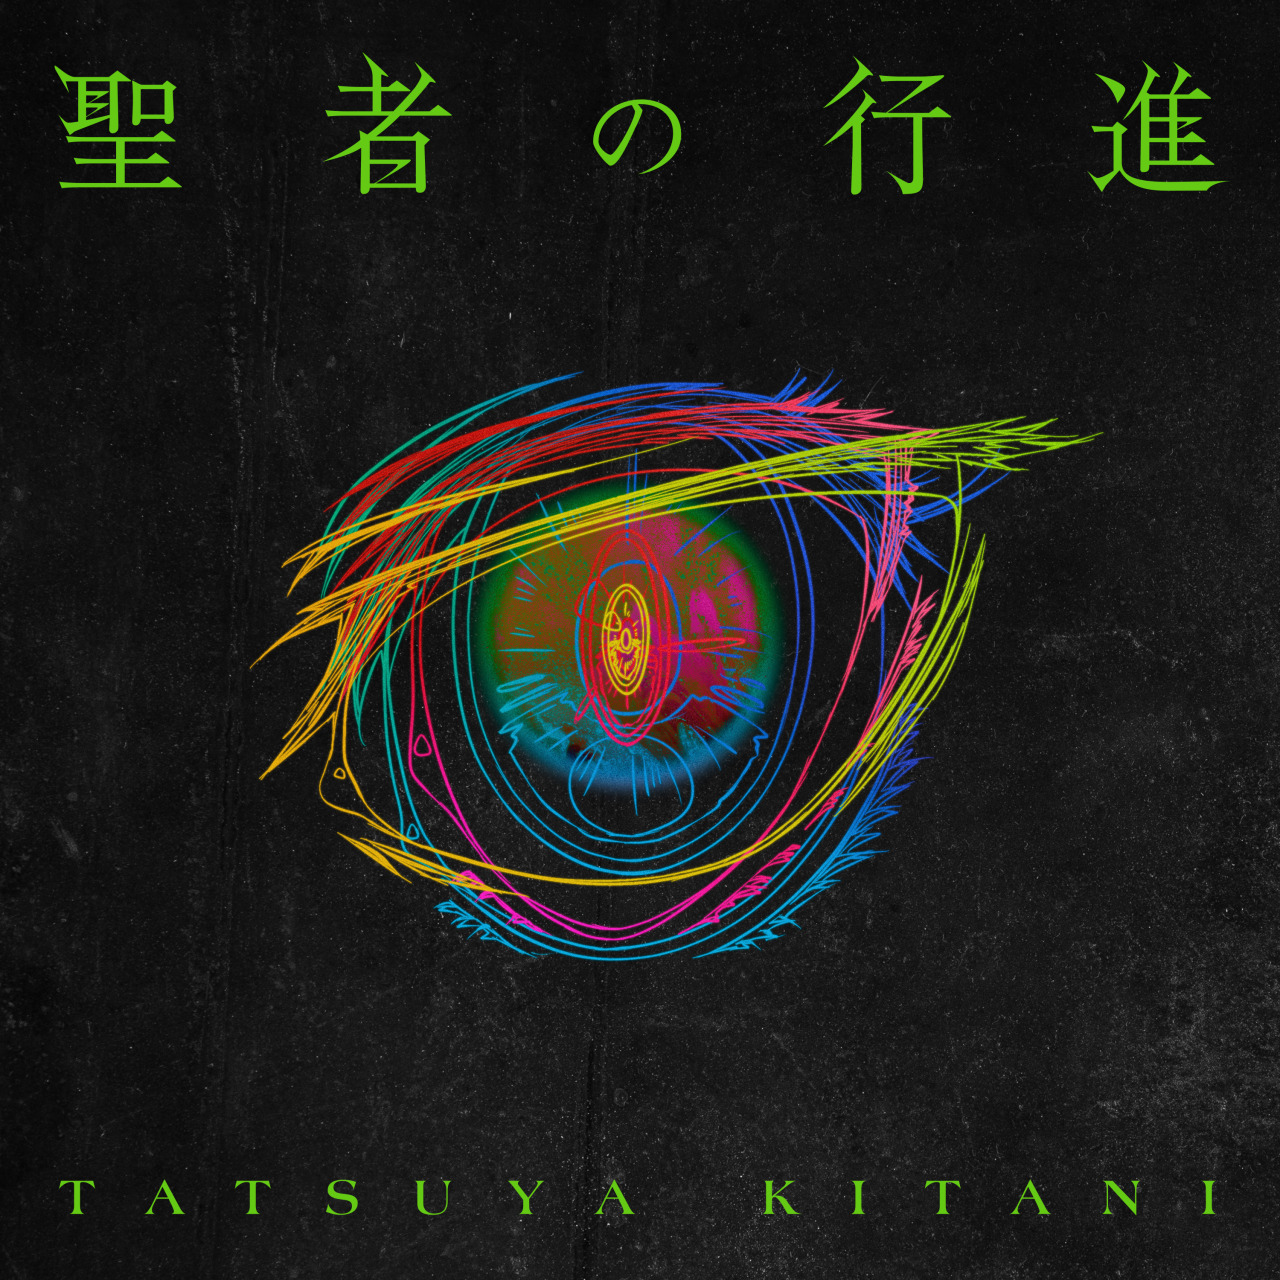 Tatsuya Kitani / “聖者の行進” Jacket
Graphic Design
Graphic Design : Ayana Inoue